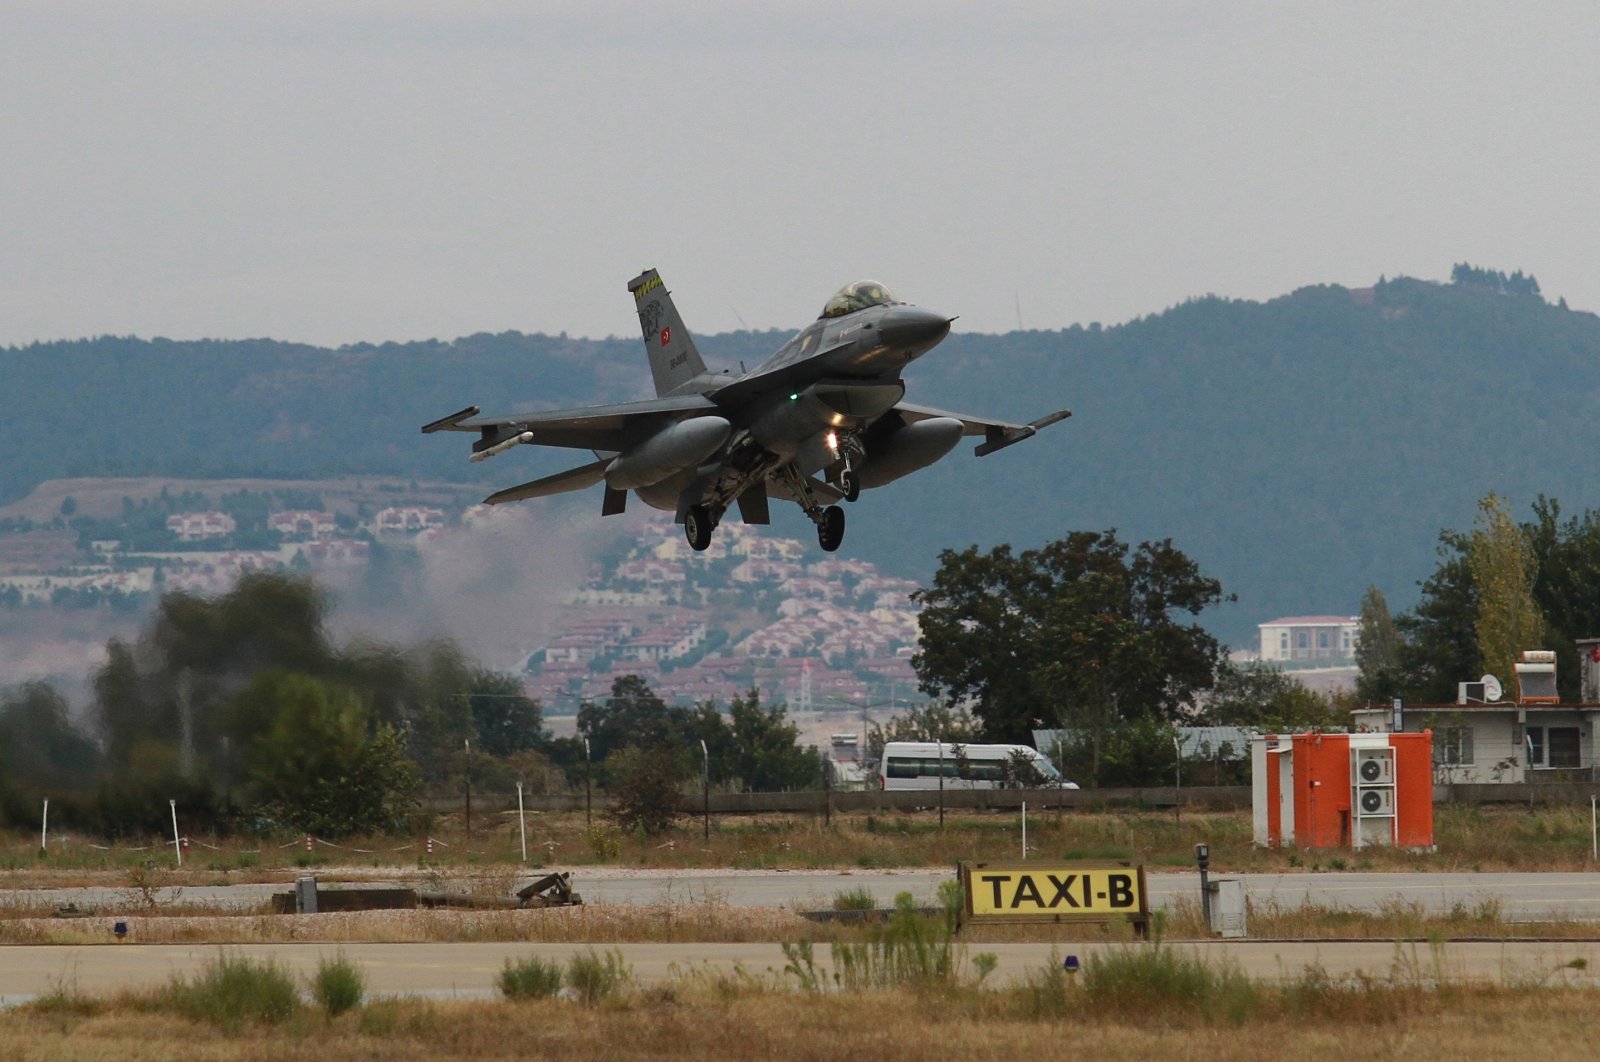 Anggota kunci Kongres AS cenderung menjual F-16 ke Turki: Laporan